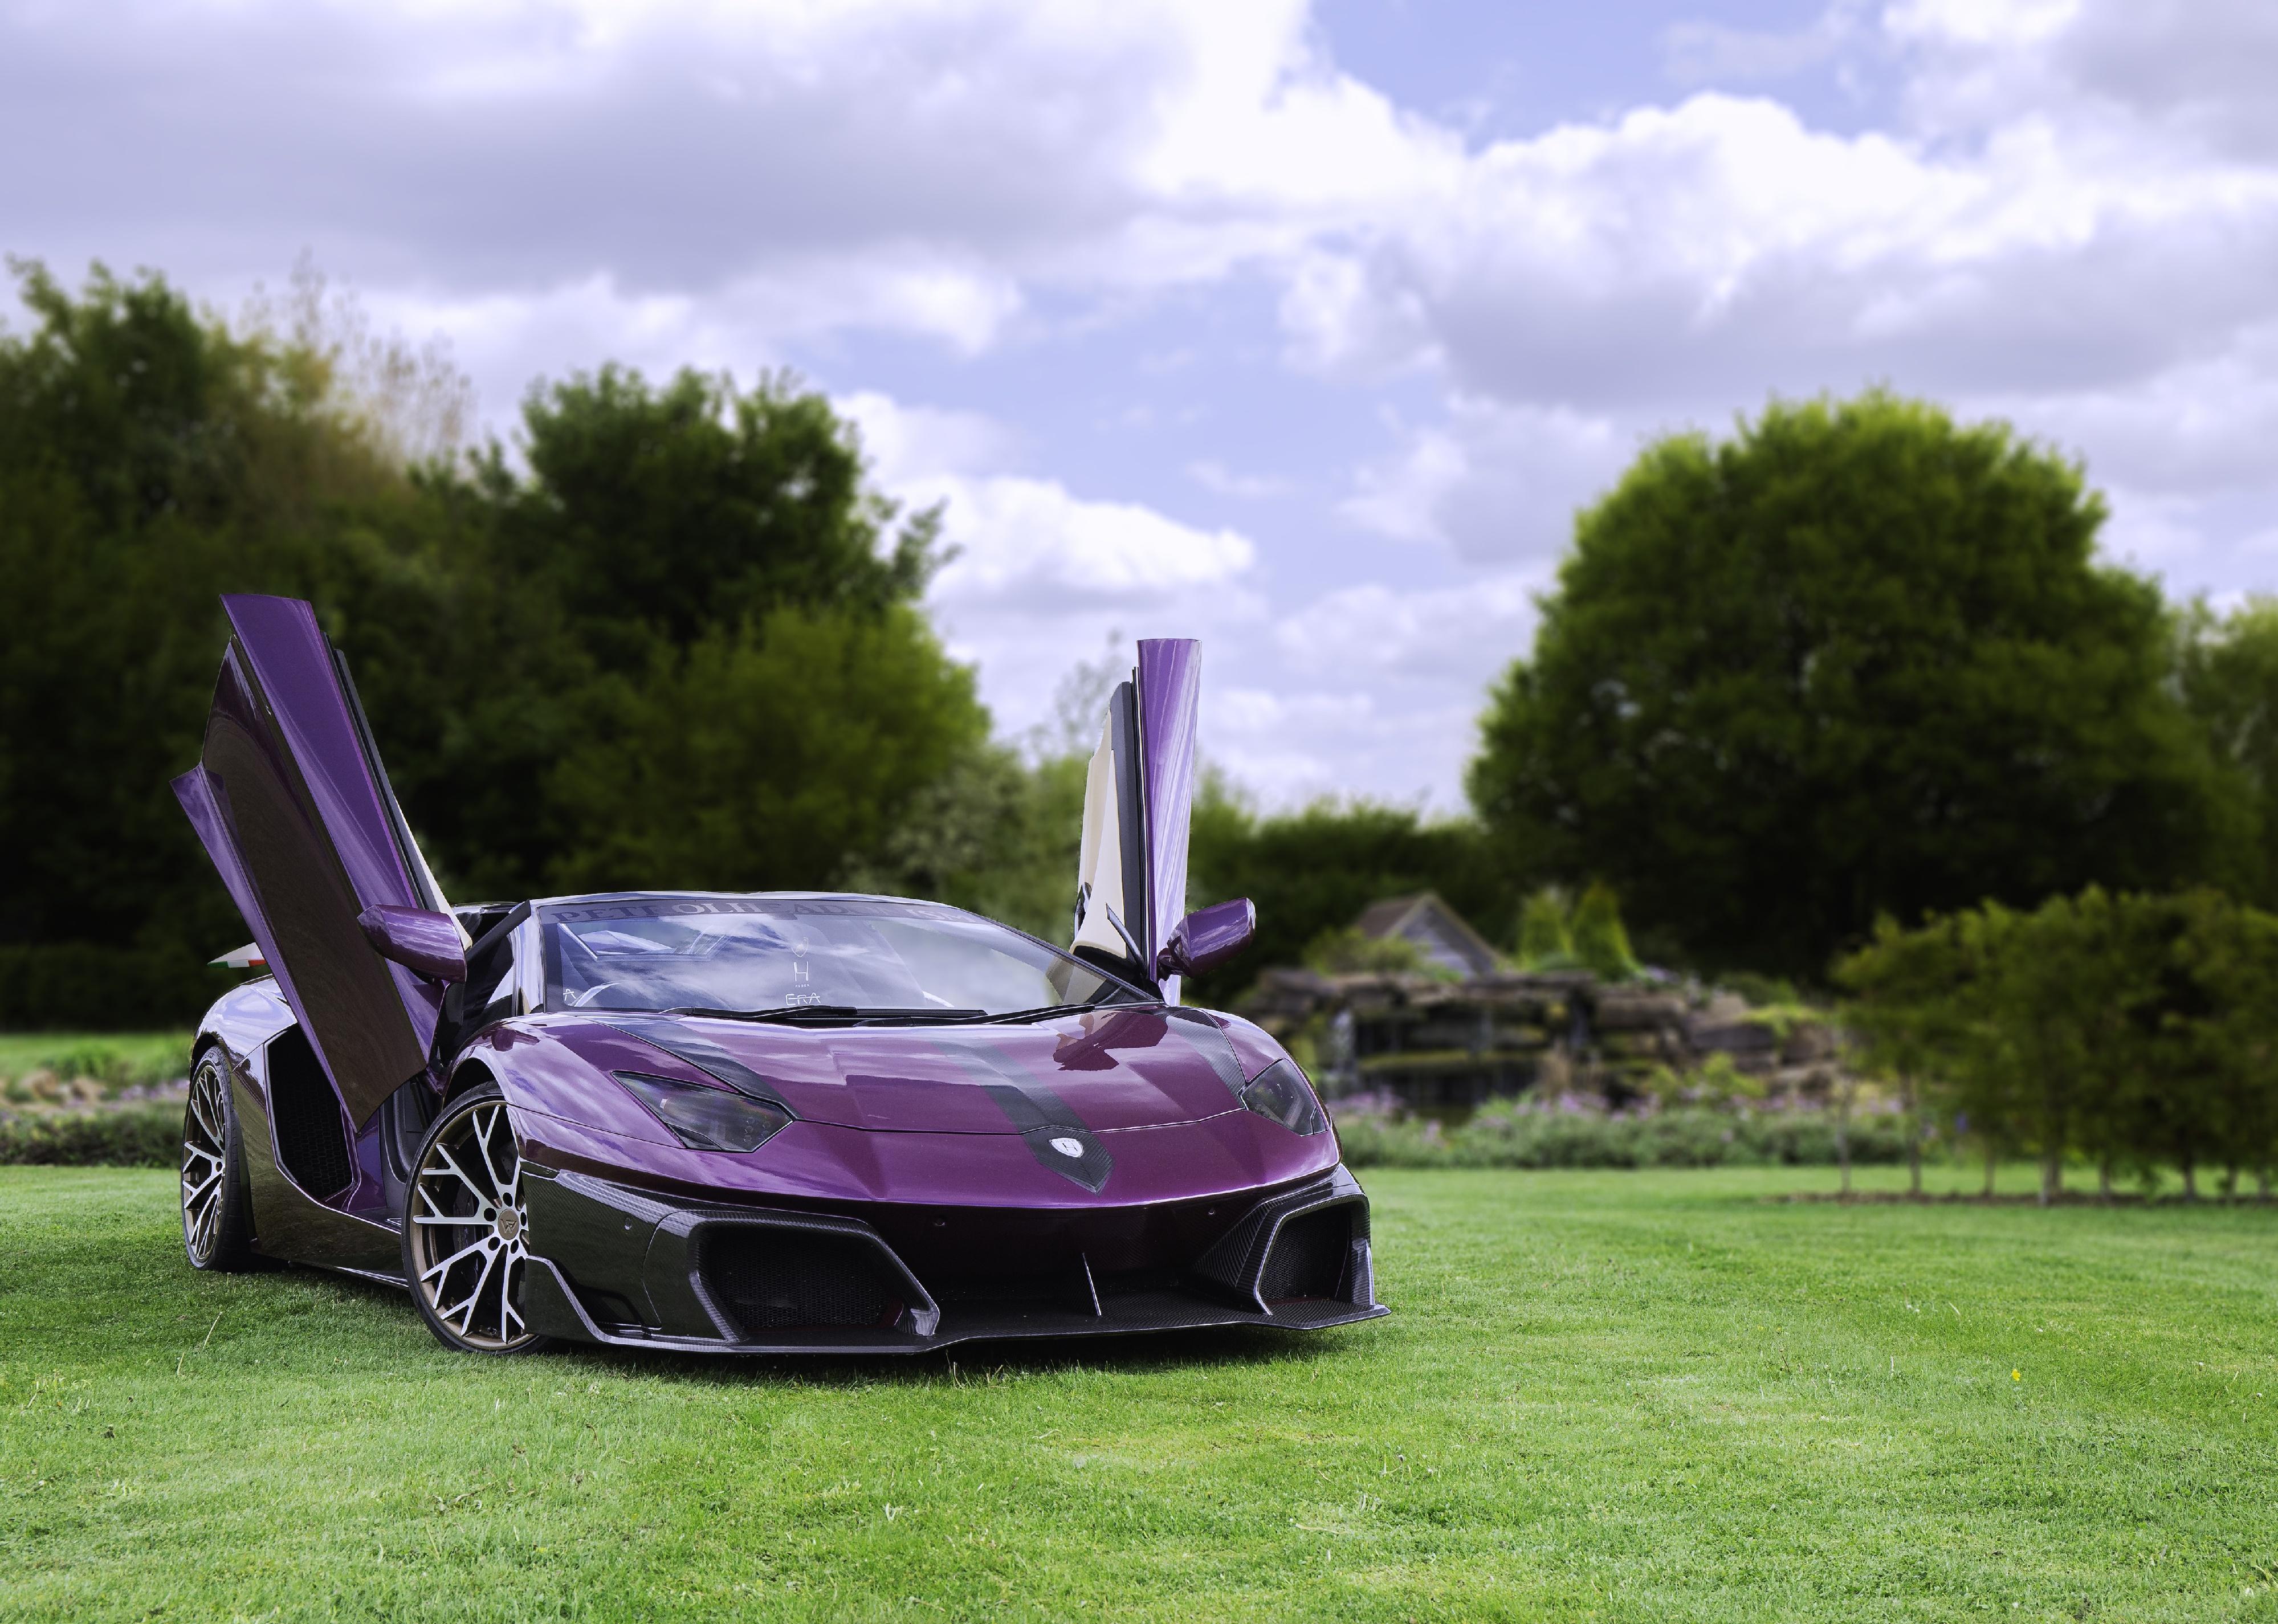 A purple Lamborghini Aventador on the grass with the doors opened upward.